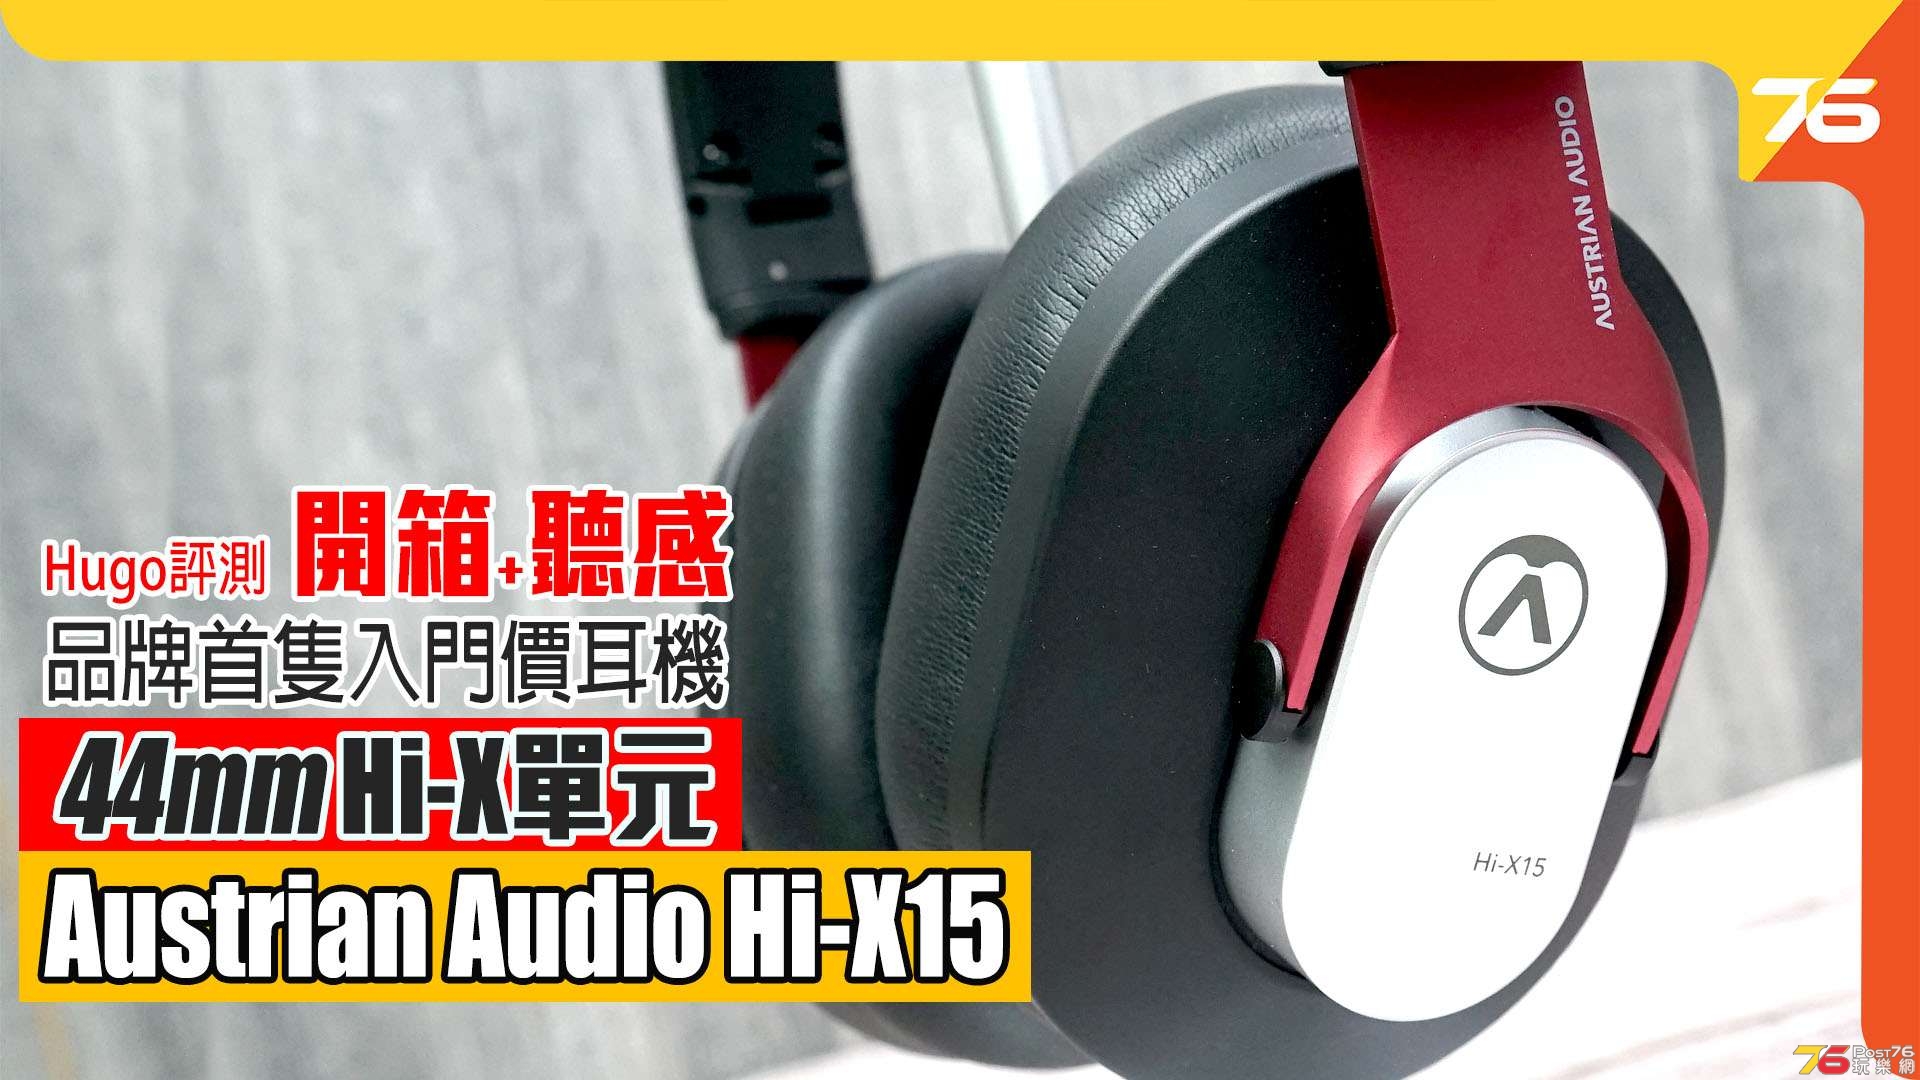 Austrian Audio Hi-X15 unbox review YT.jpg